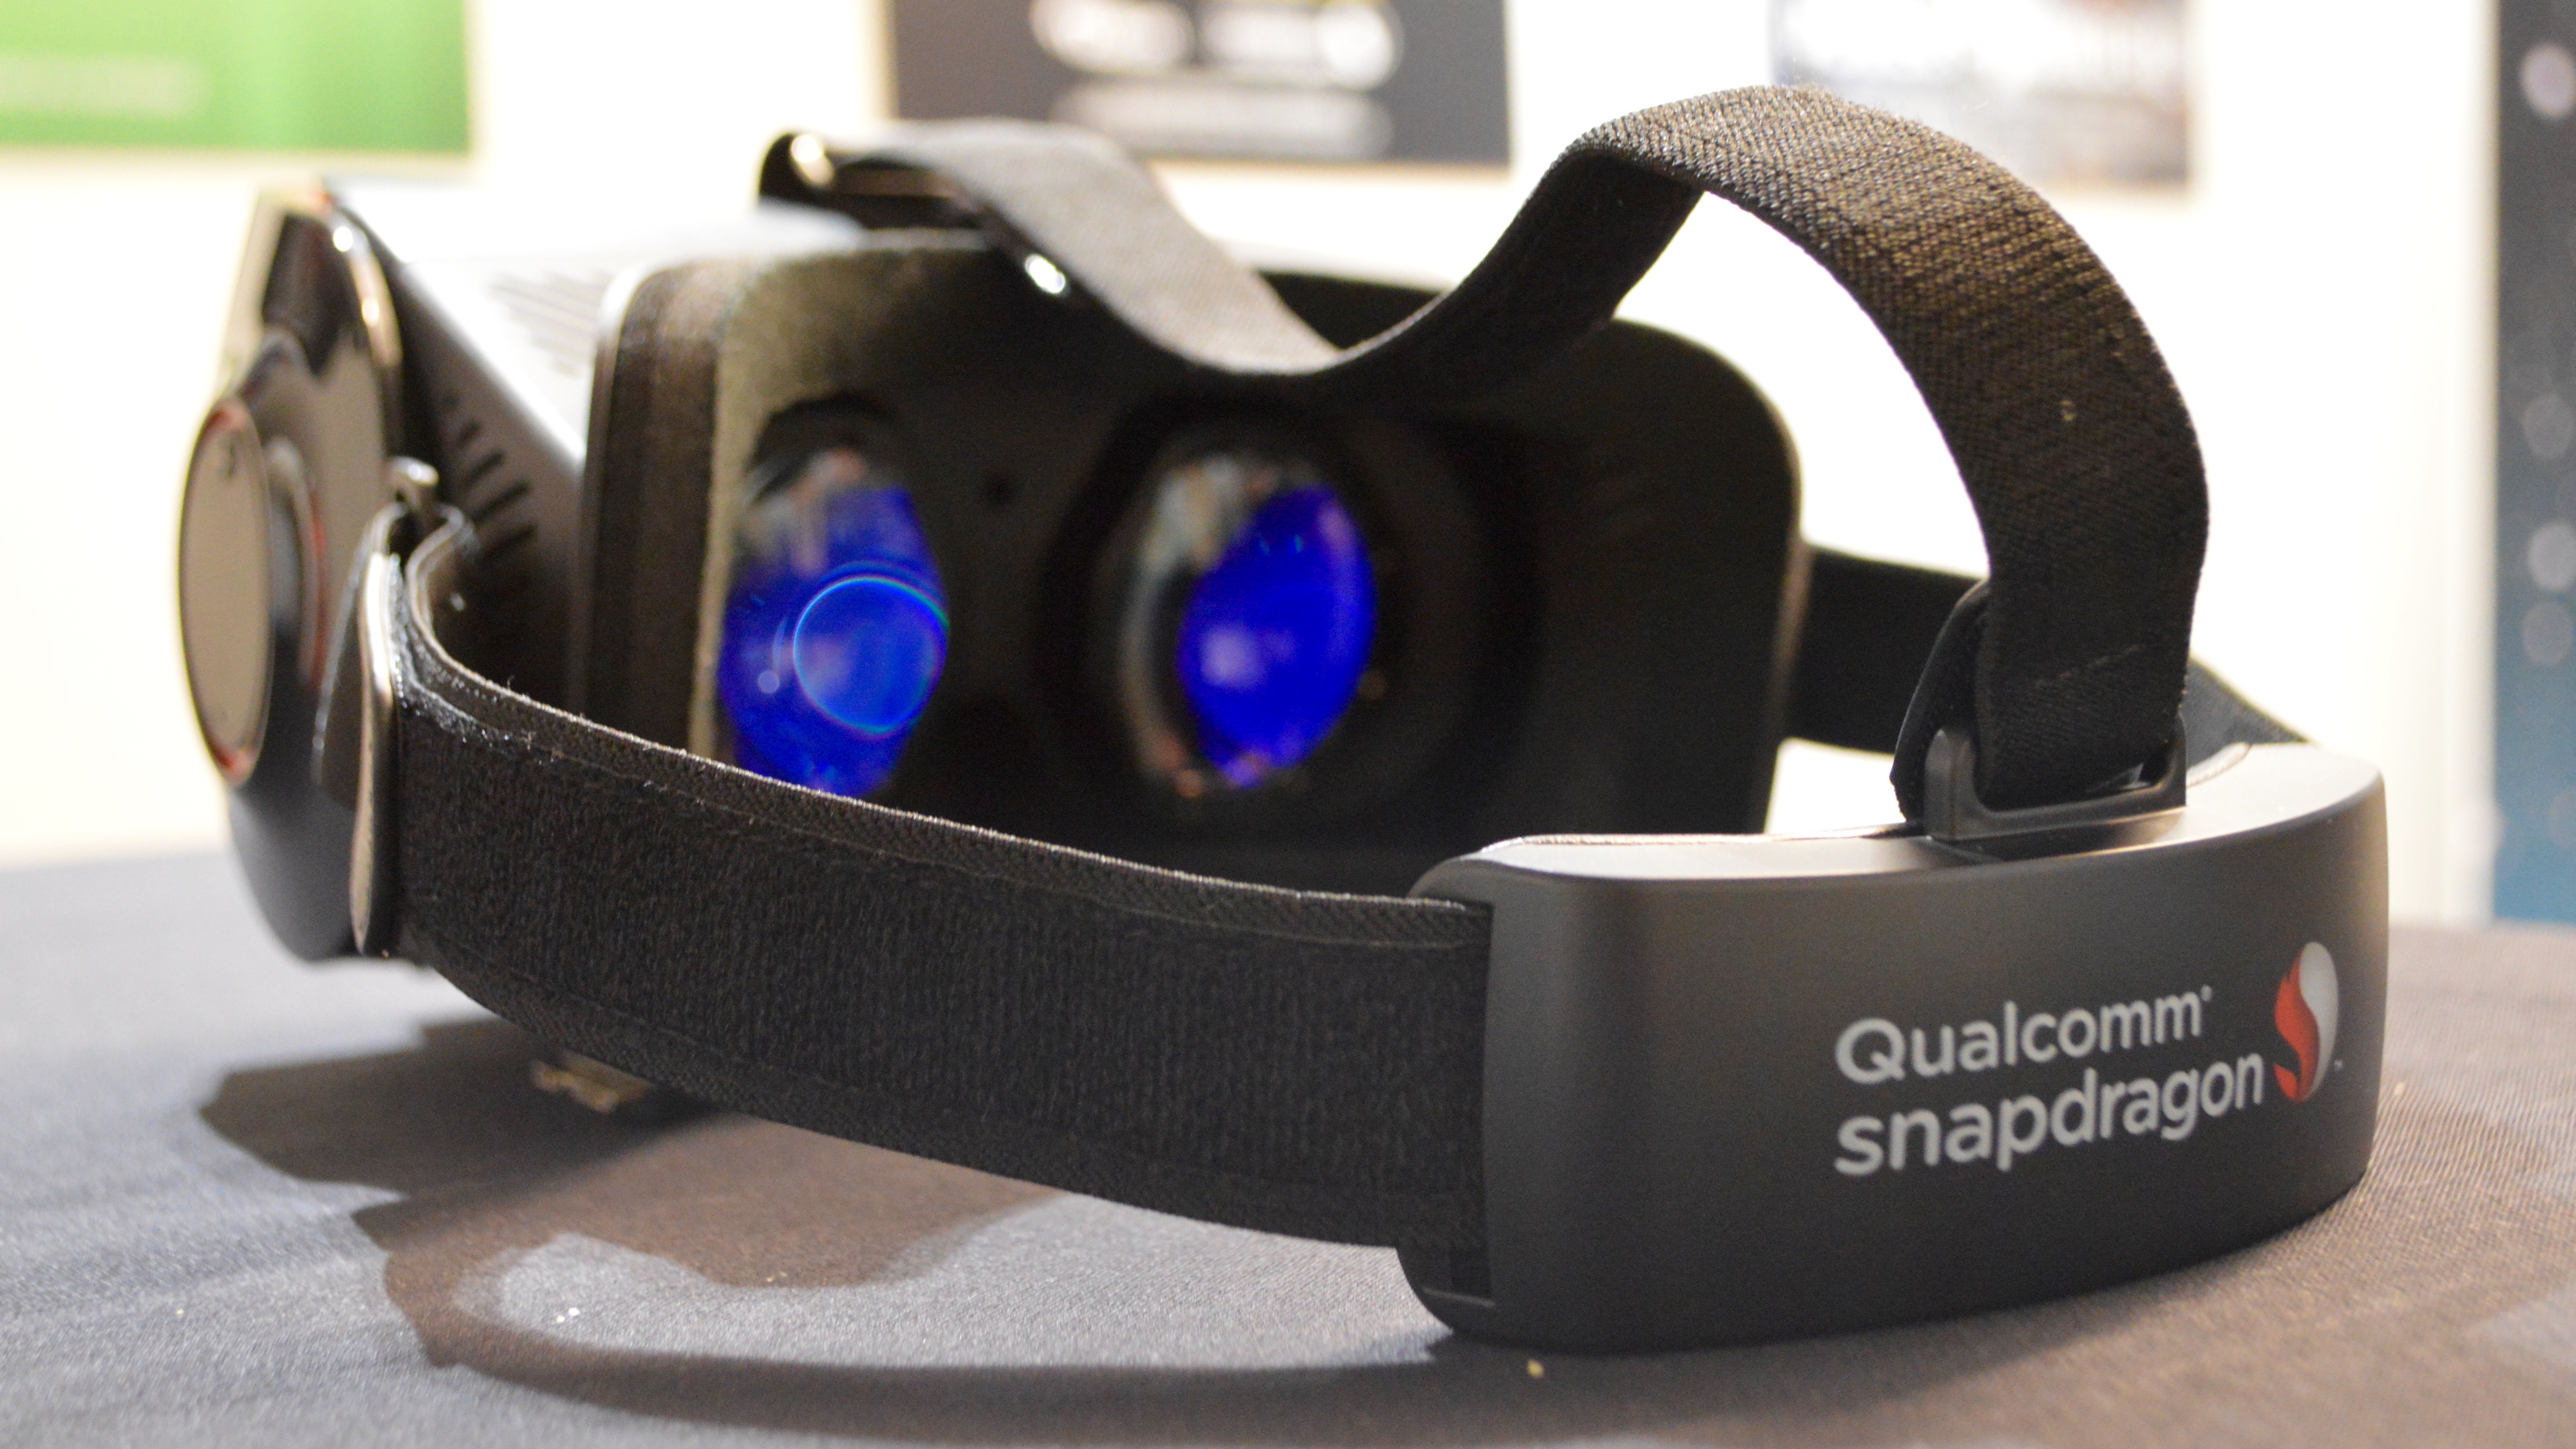 First look: Qualcomm Snapdragon 835 VR Developer Kit headset | TechRadar